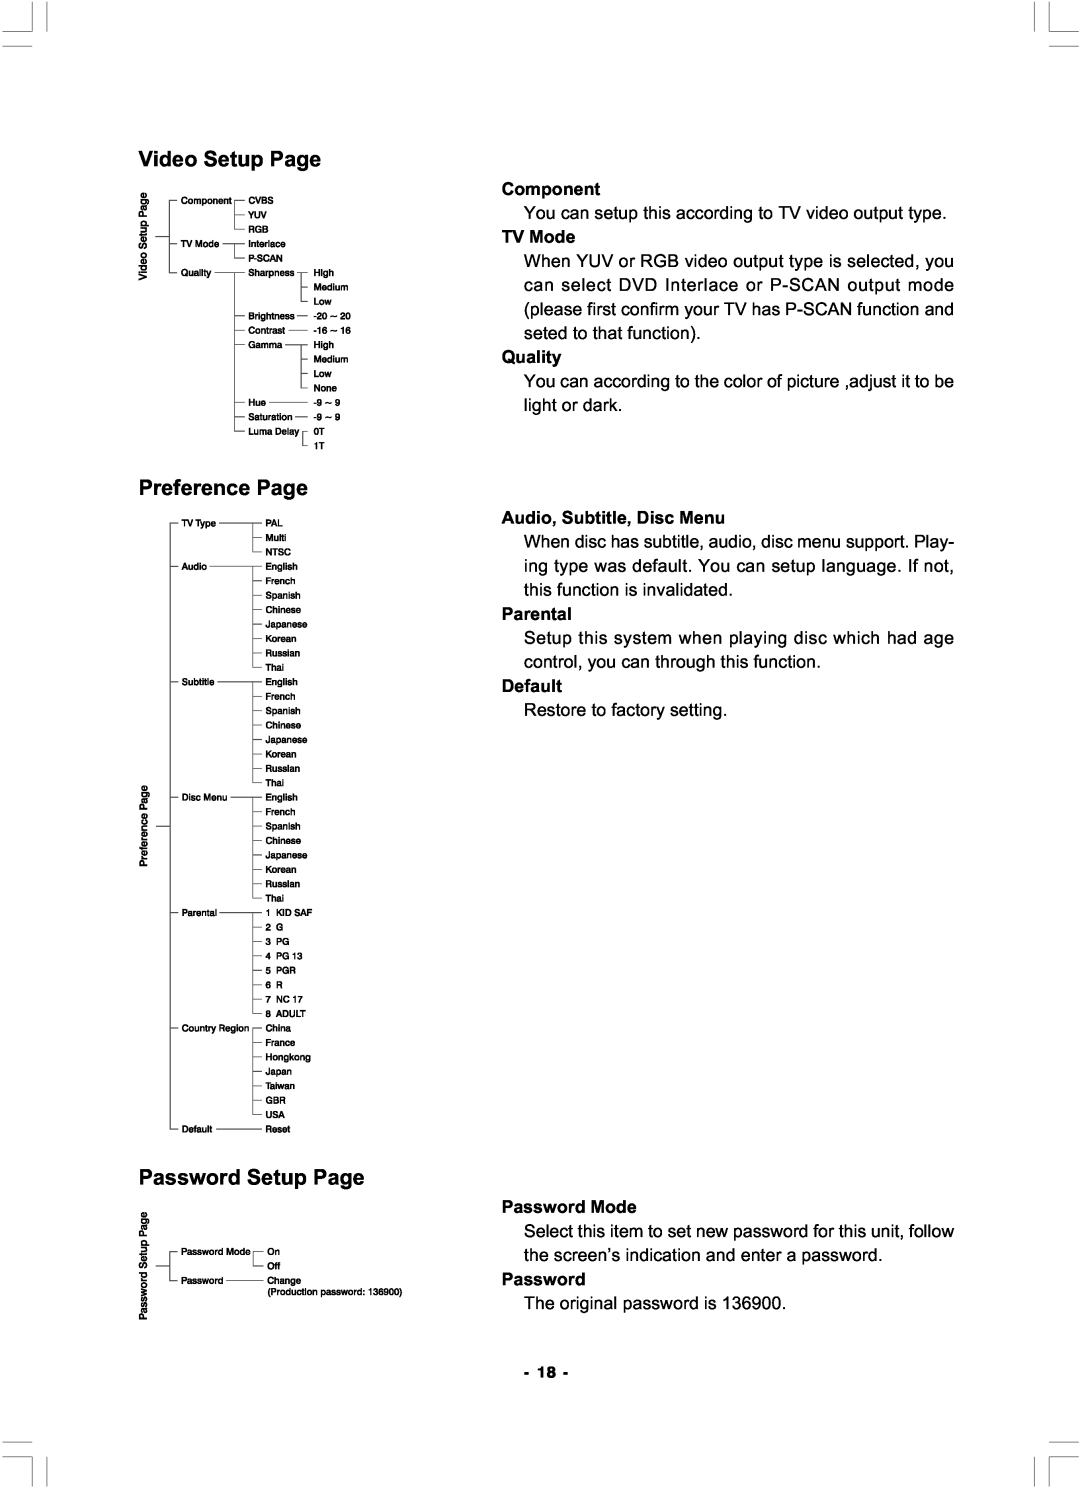 Hyundai H-MS1100 manual Video Setup Page Preference Page, Password Setup Page 